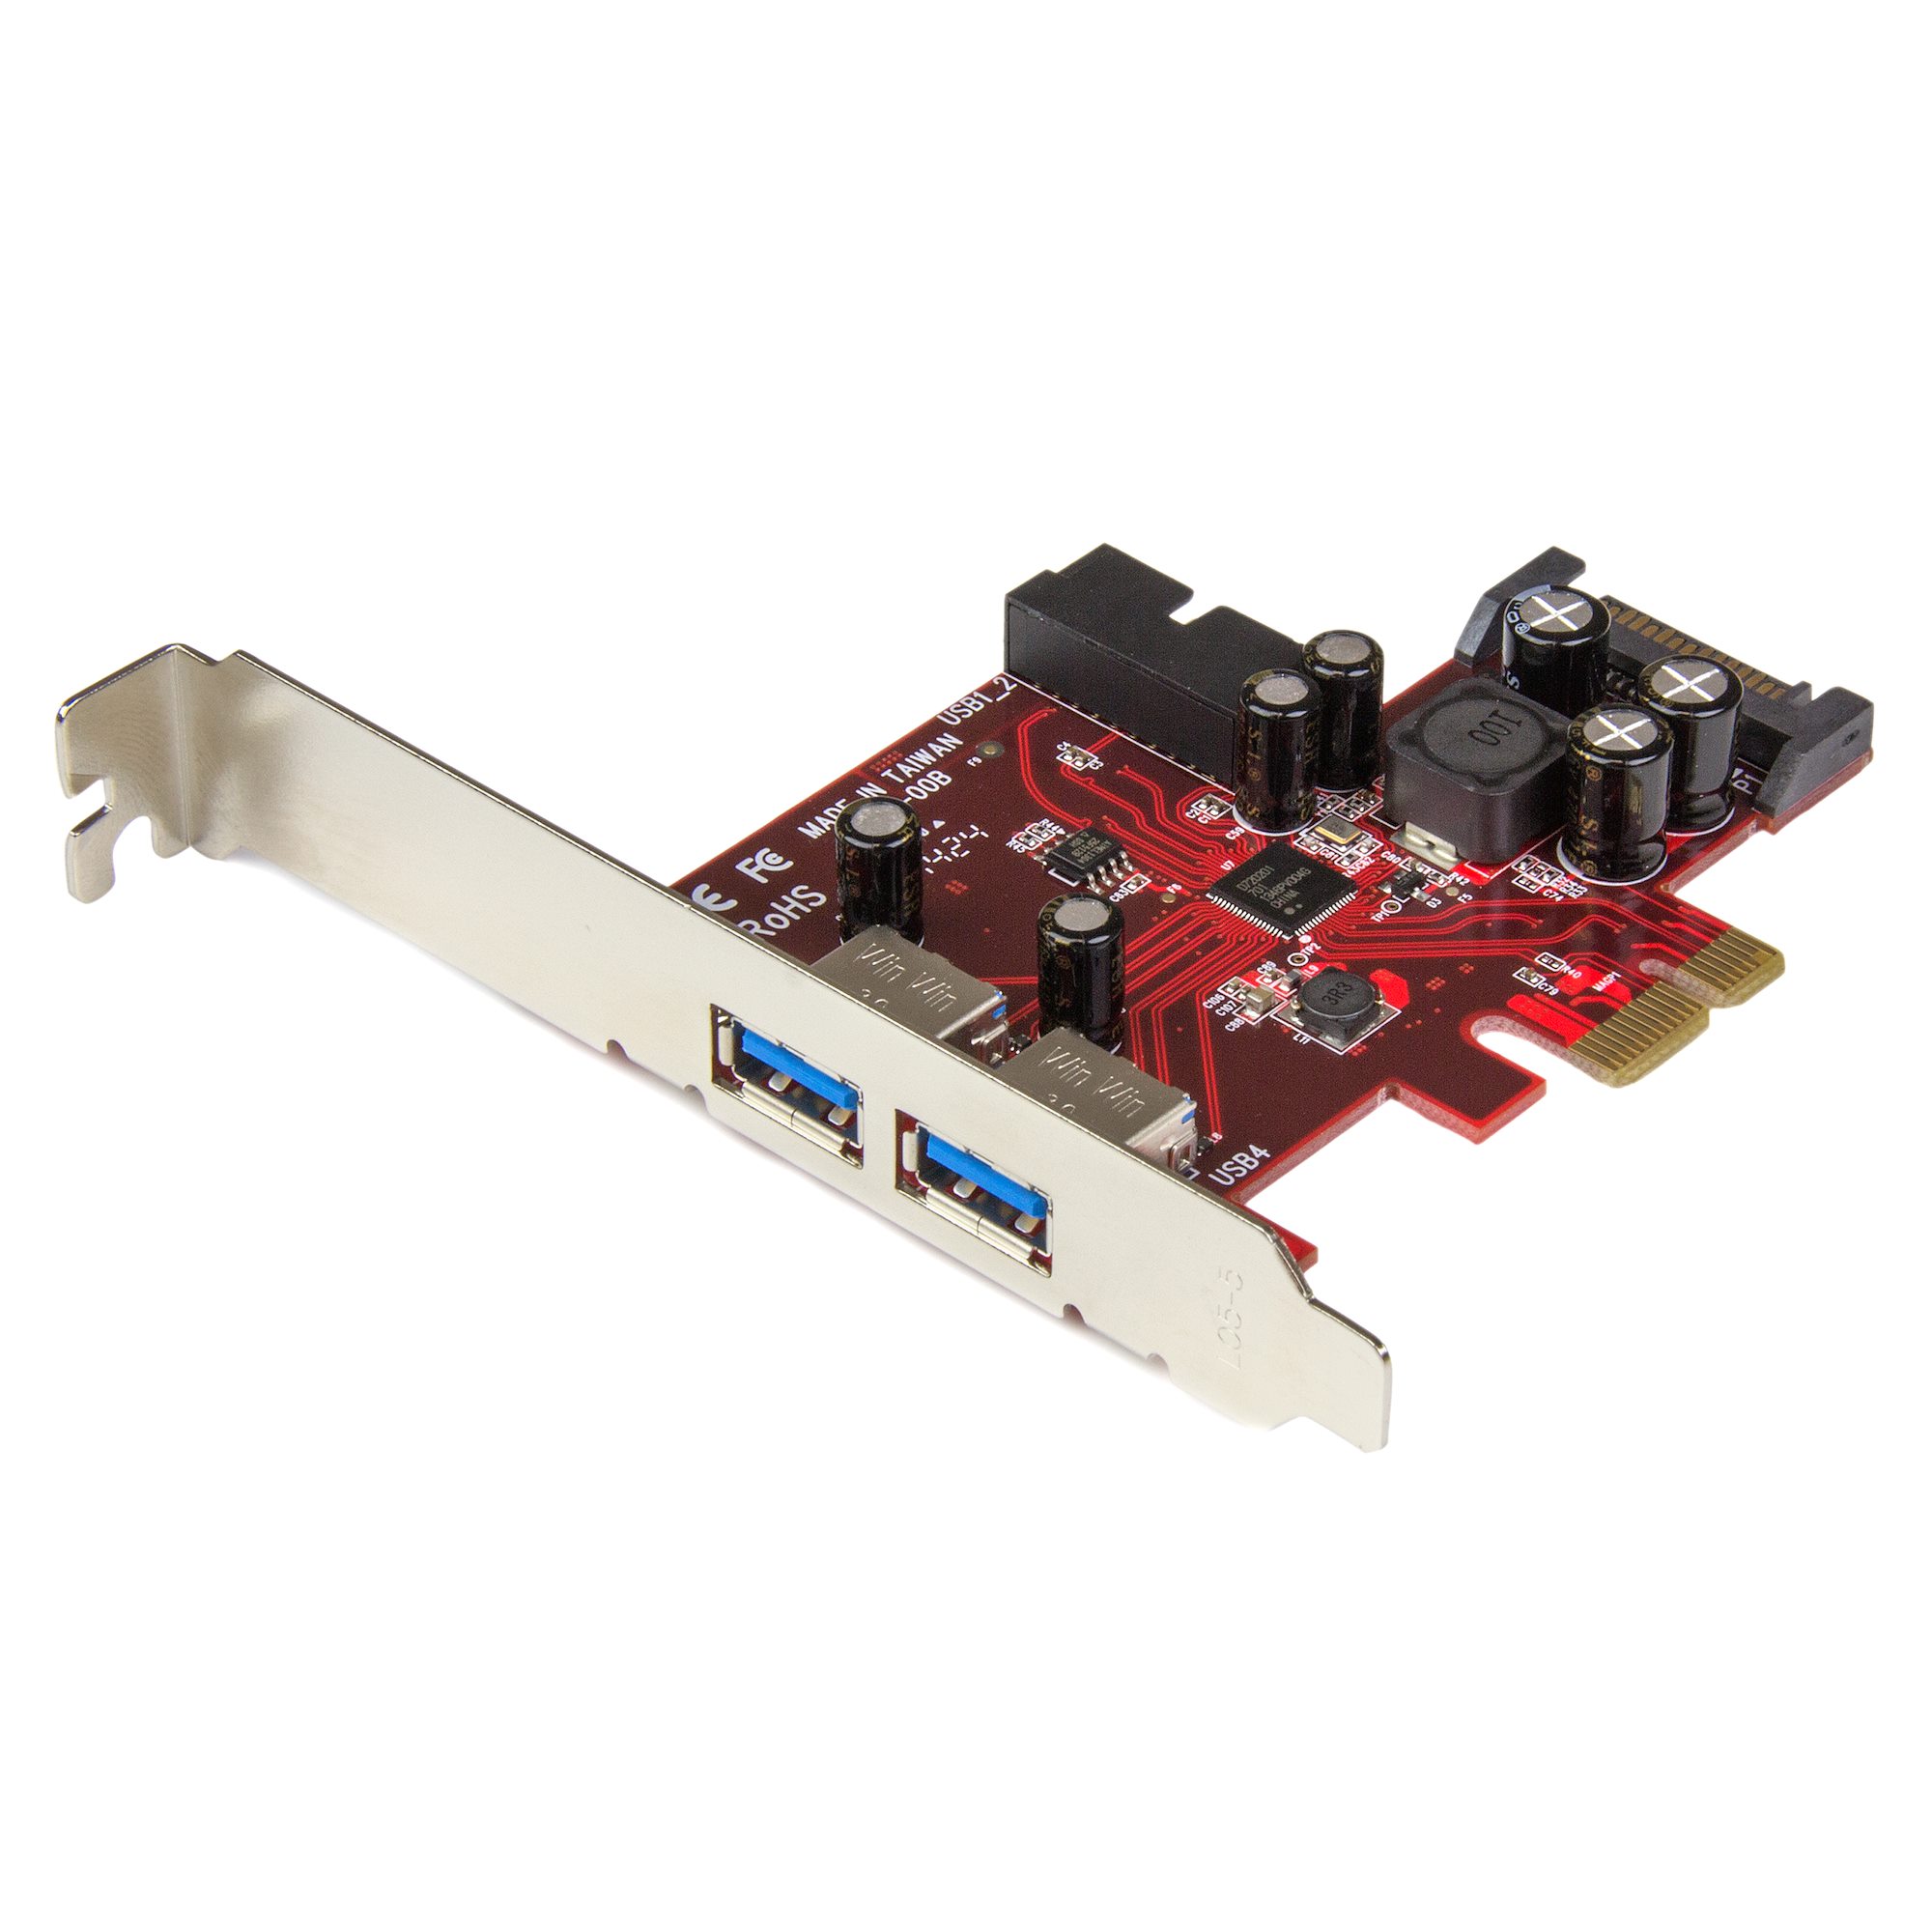 Beperken Hij Dor 4 Port PCIe USB 3.0 Card - 2 Ext & 2 Int - USB 3.0 Cards | StarTech.com